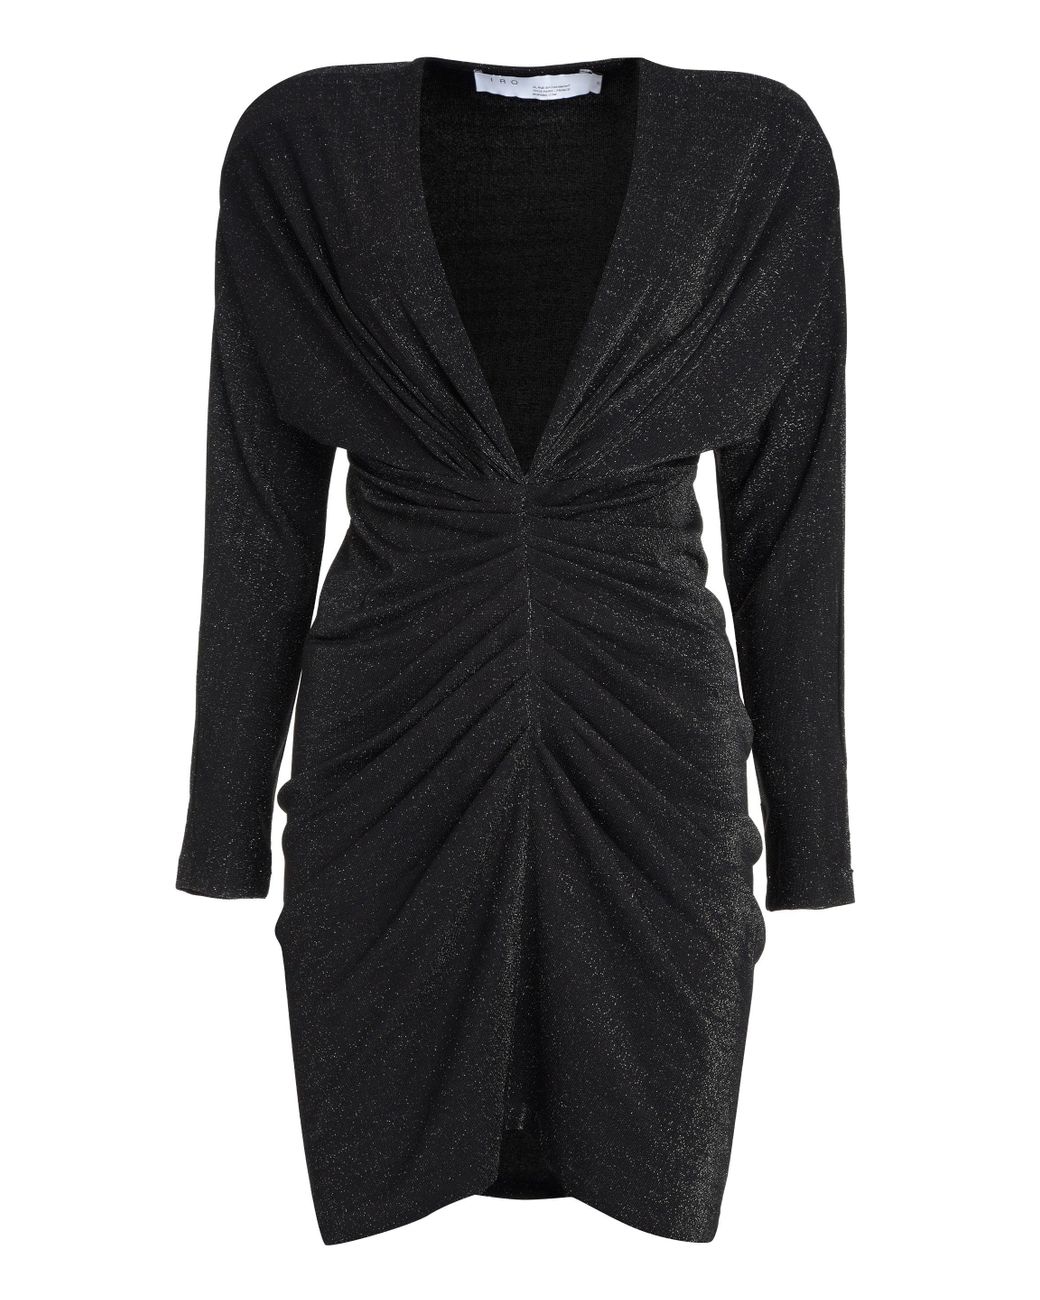 IRO Synthetic Draped Lurex Jersey Dress in Black | Lyst